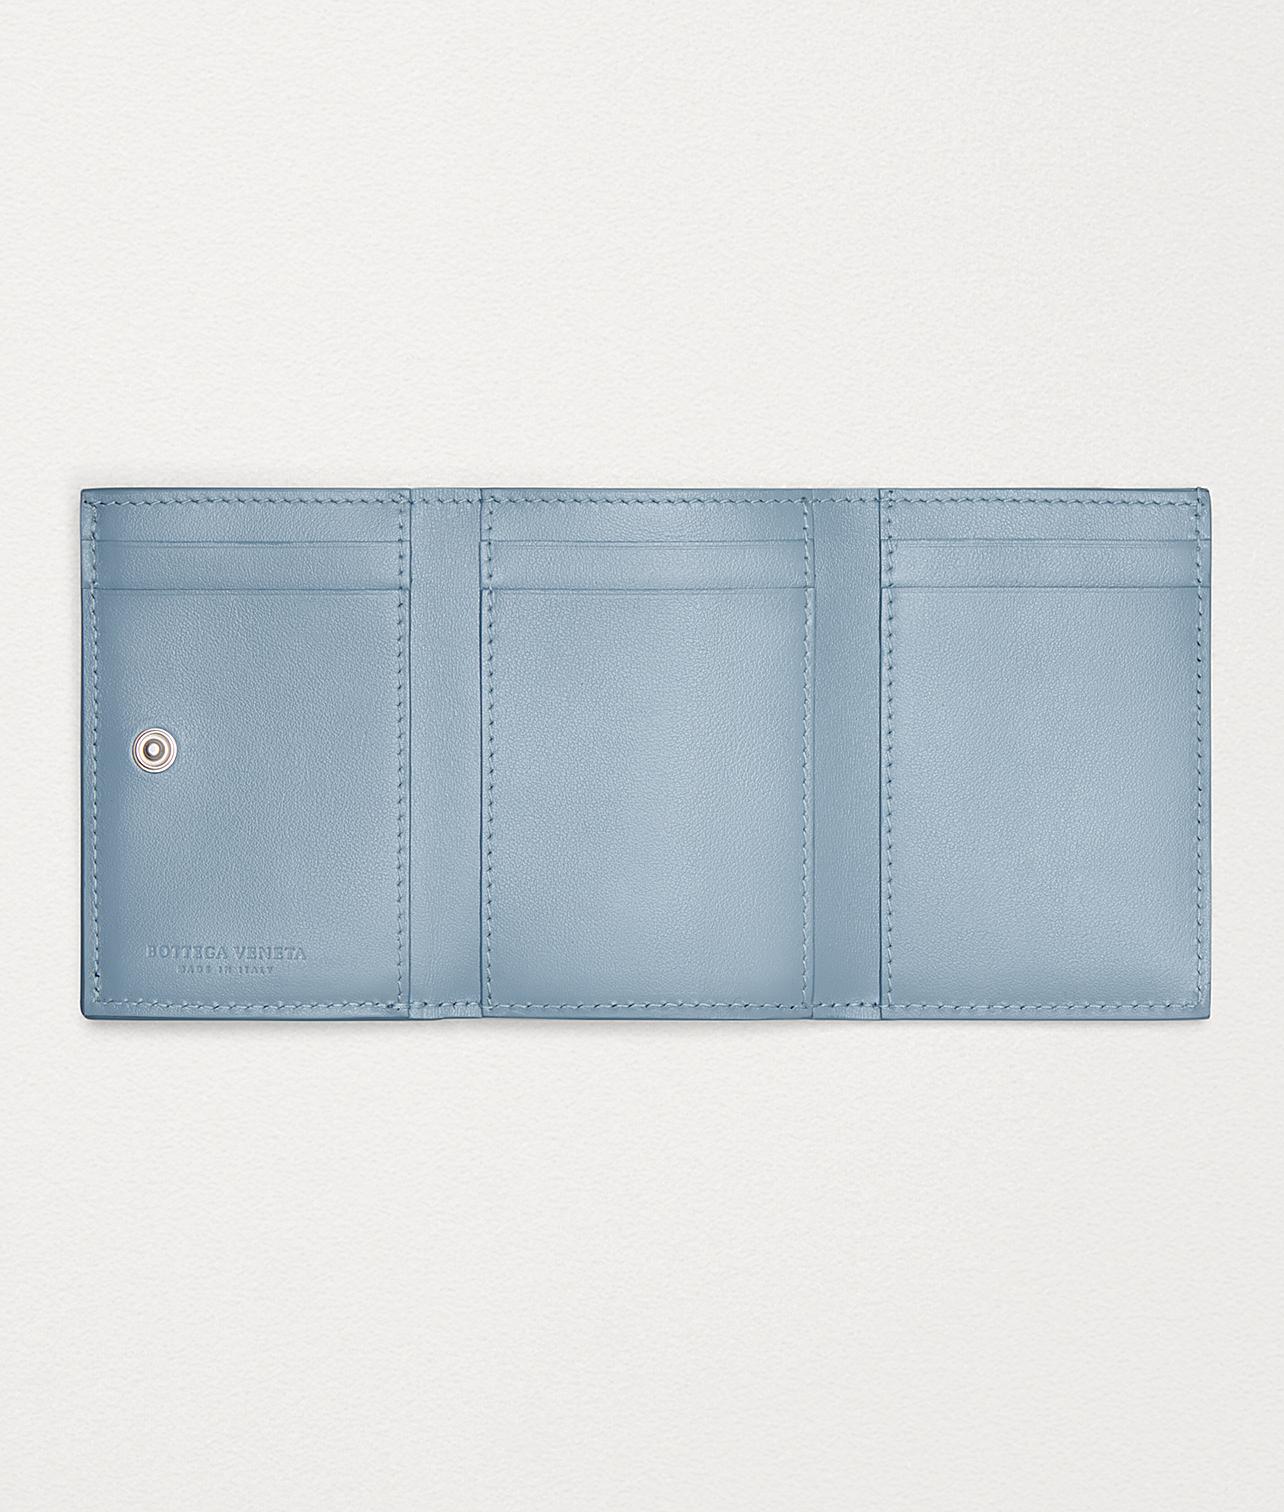 Bottega Veneta Leather Tri-fold Wallet in Blue - Lyst